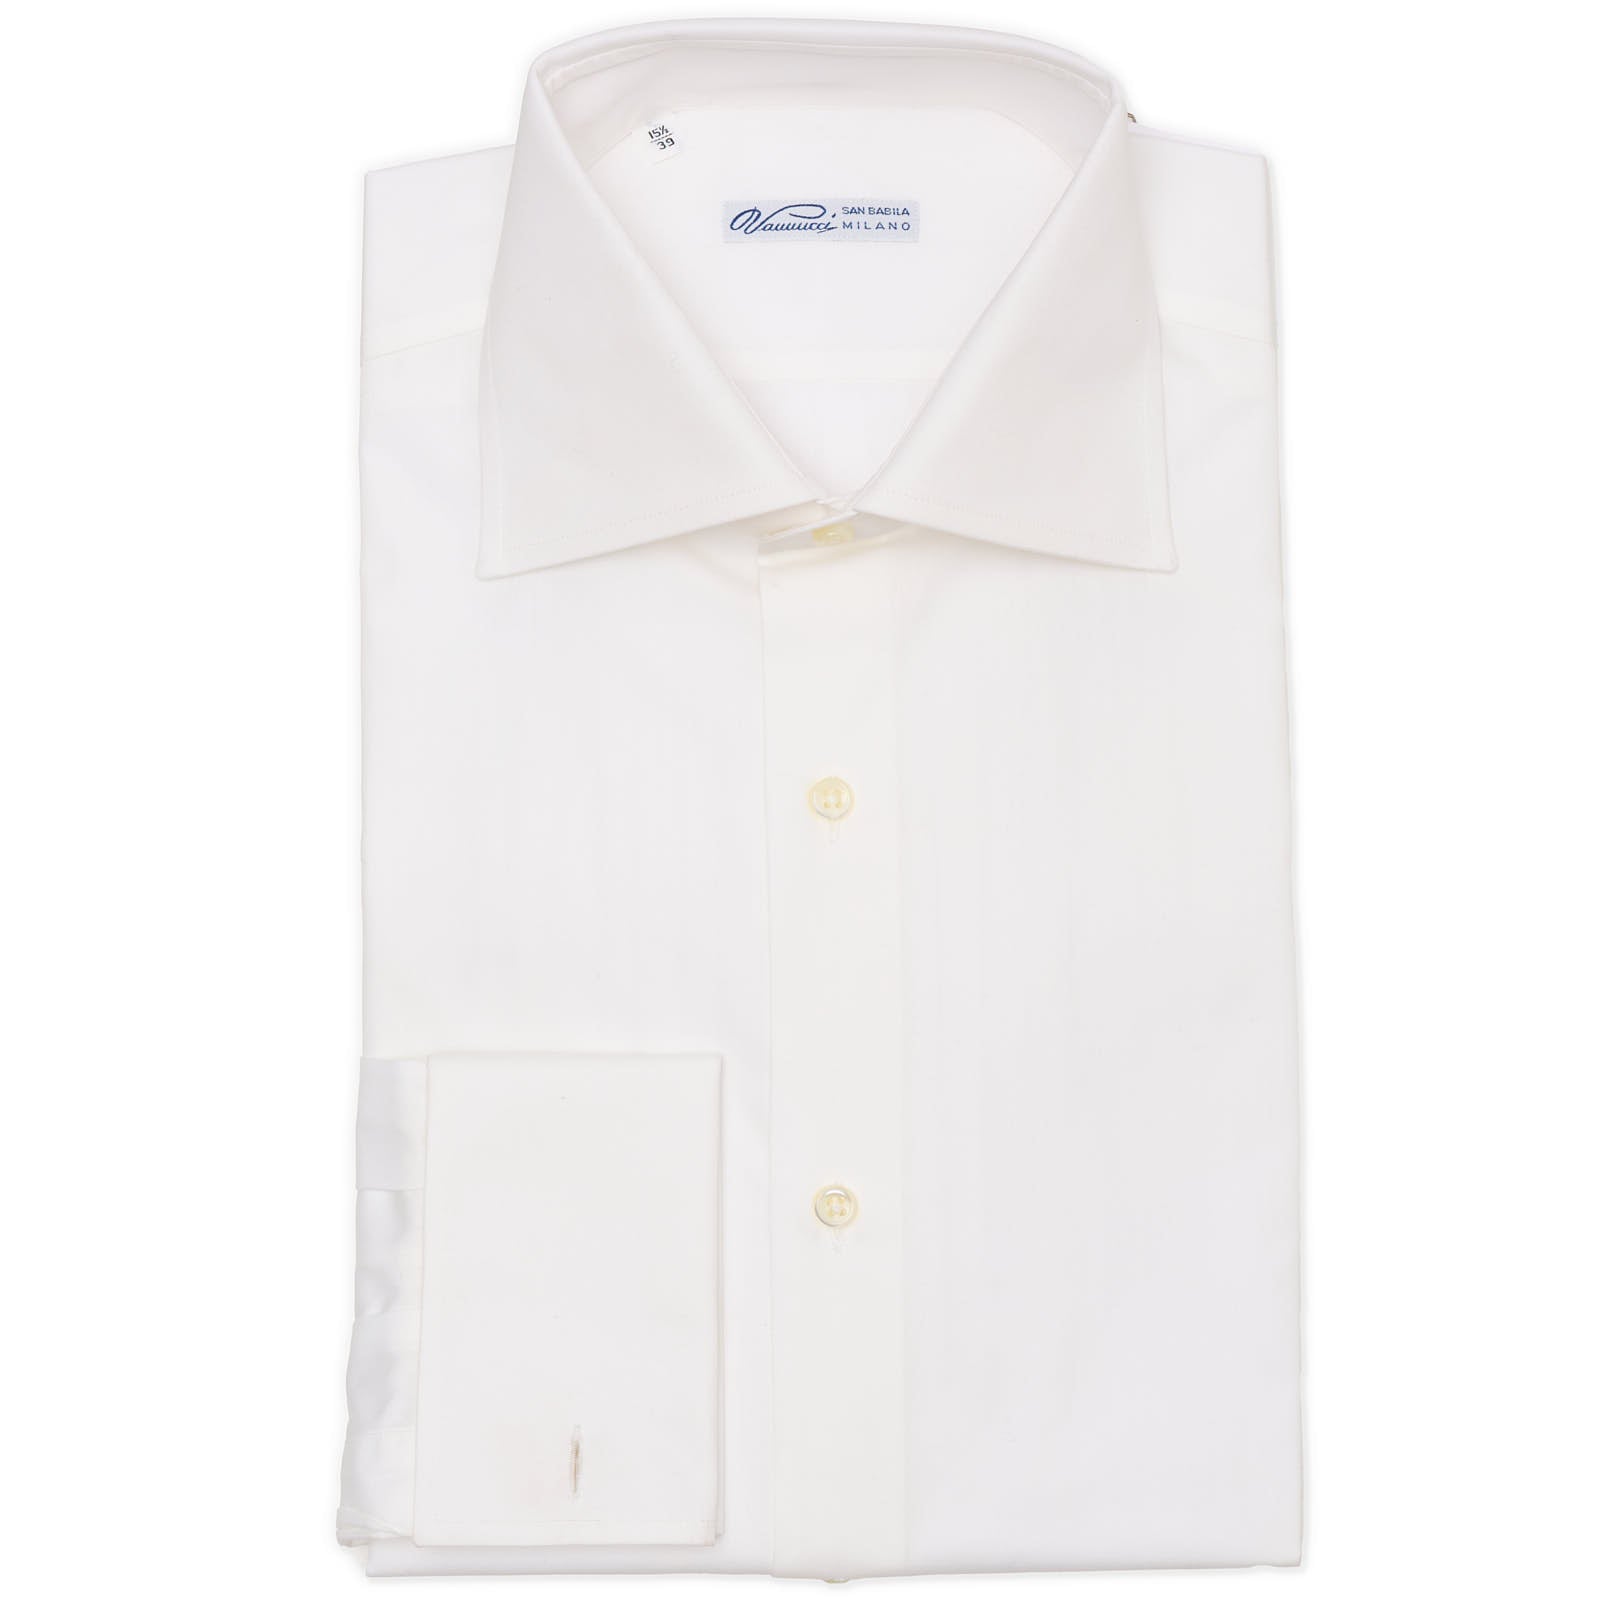 VANNUCCI Milano White Cotton French Cuffn Dress Shirt NEW